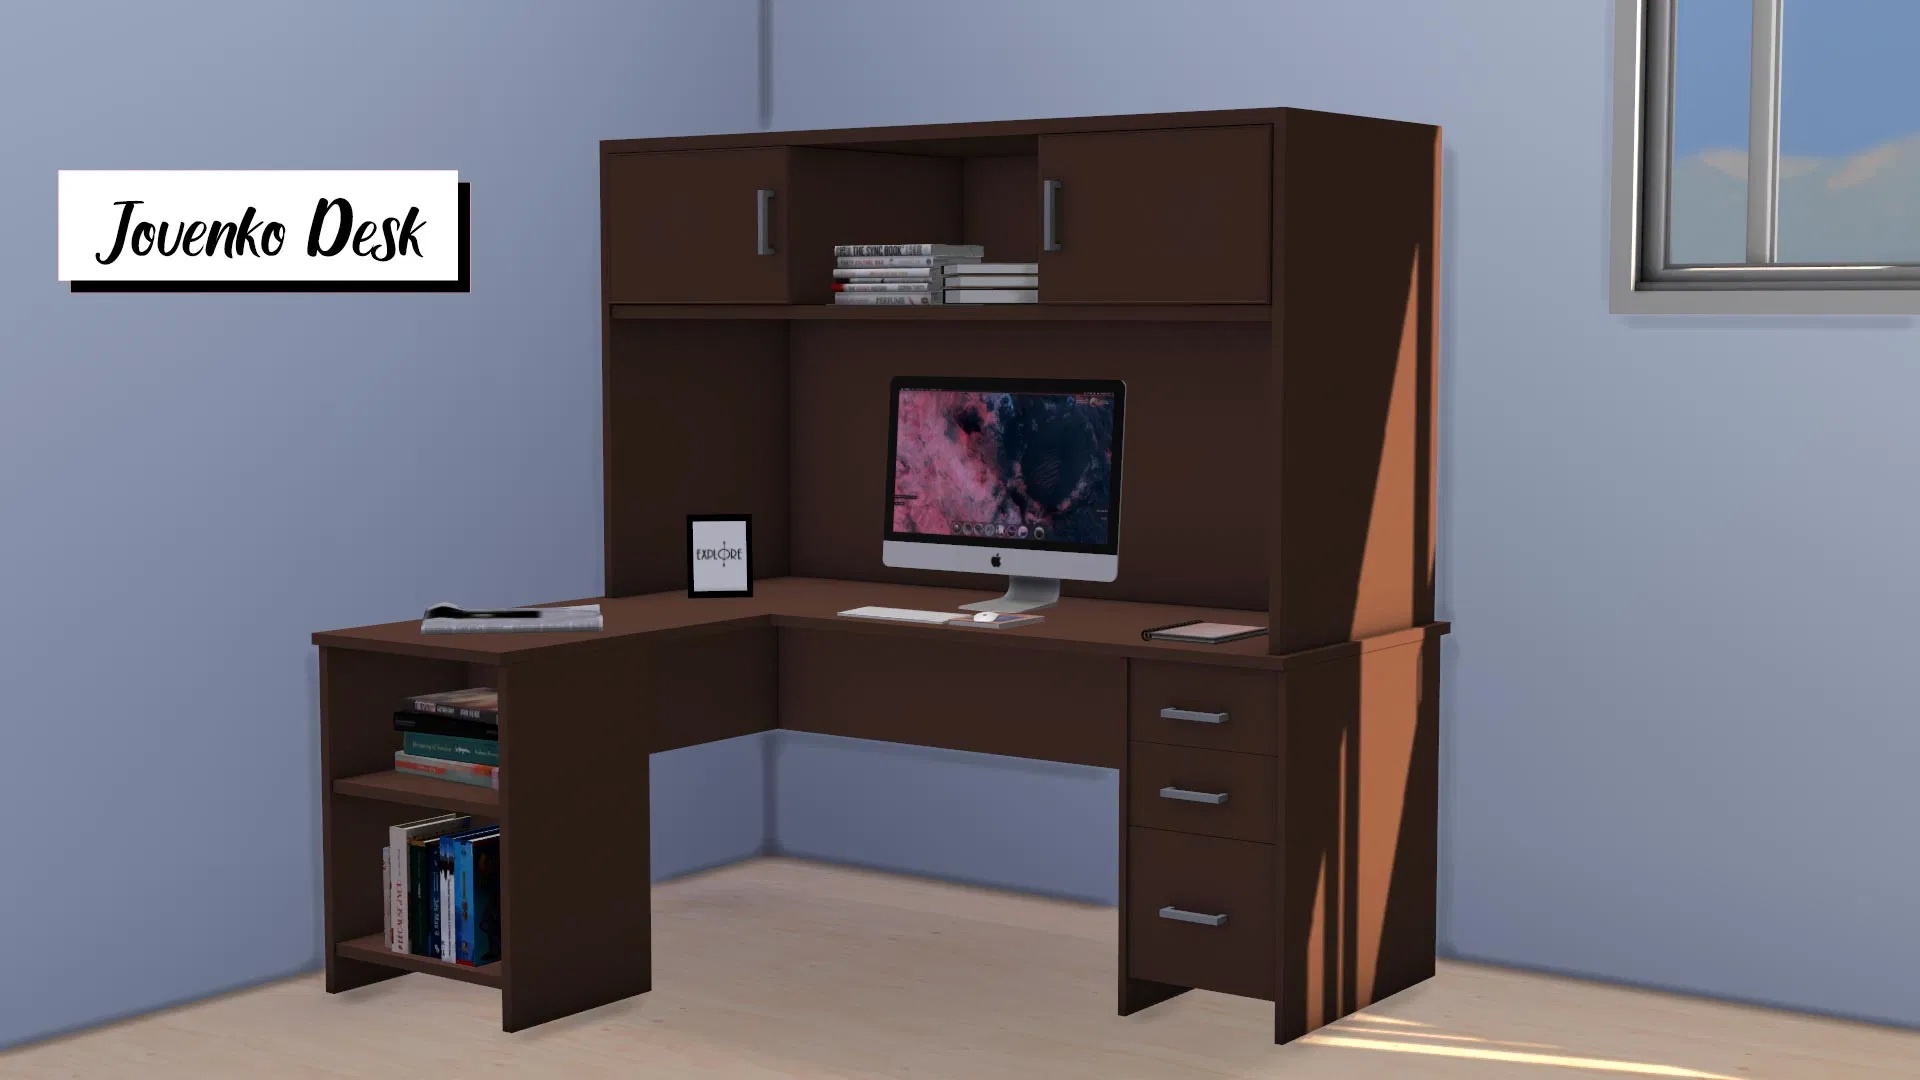 Jovenko Desk from Sunkissedlilacs • Sims 4 Downloads